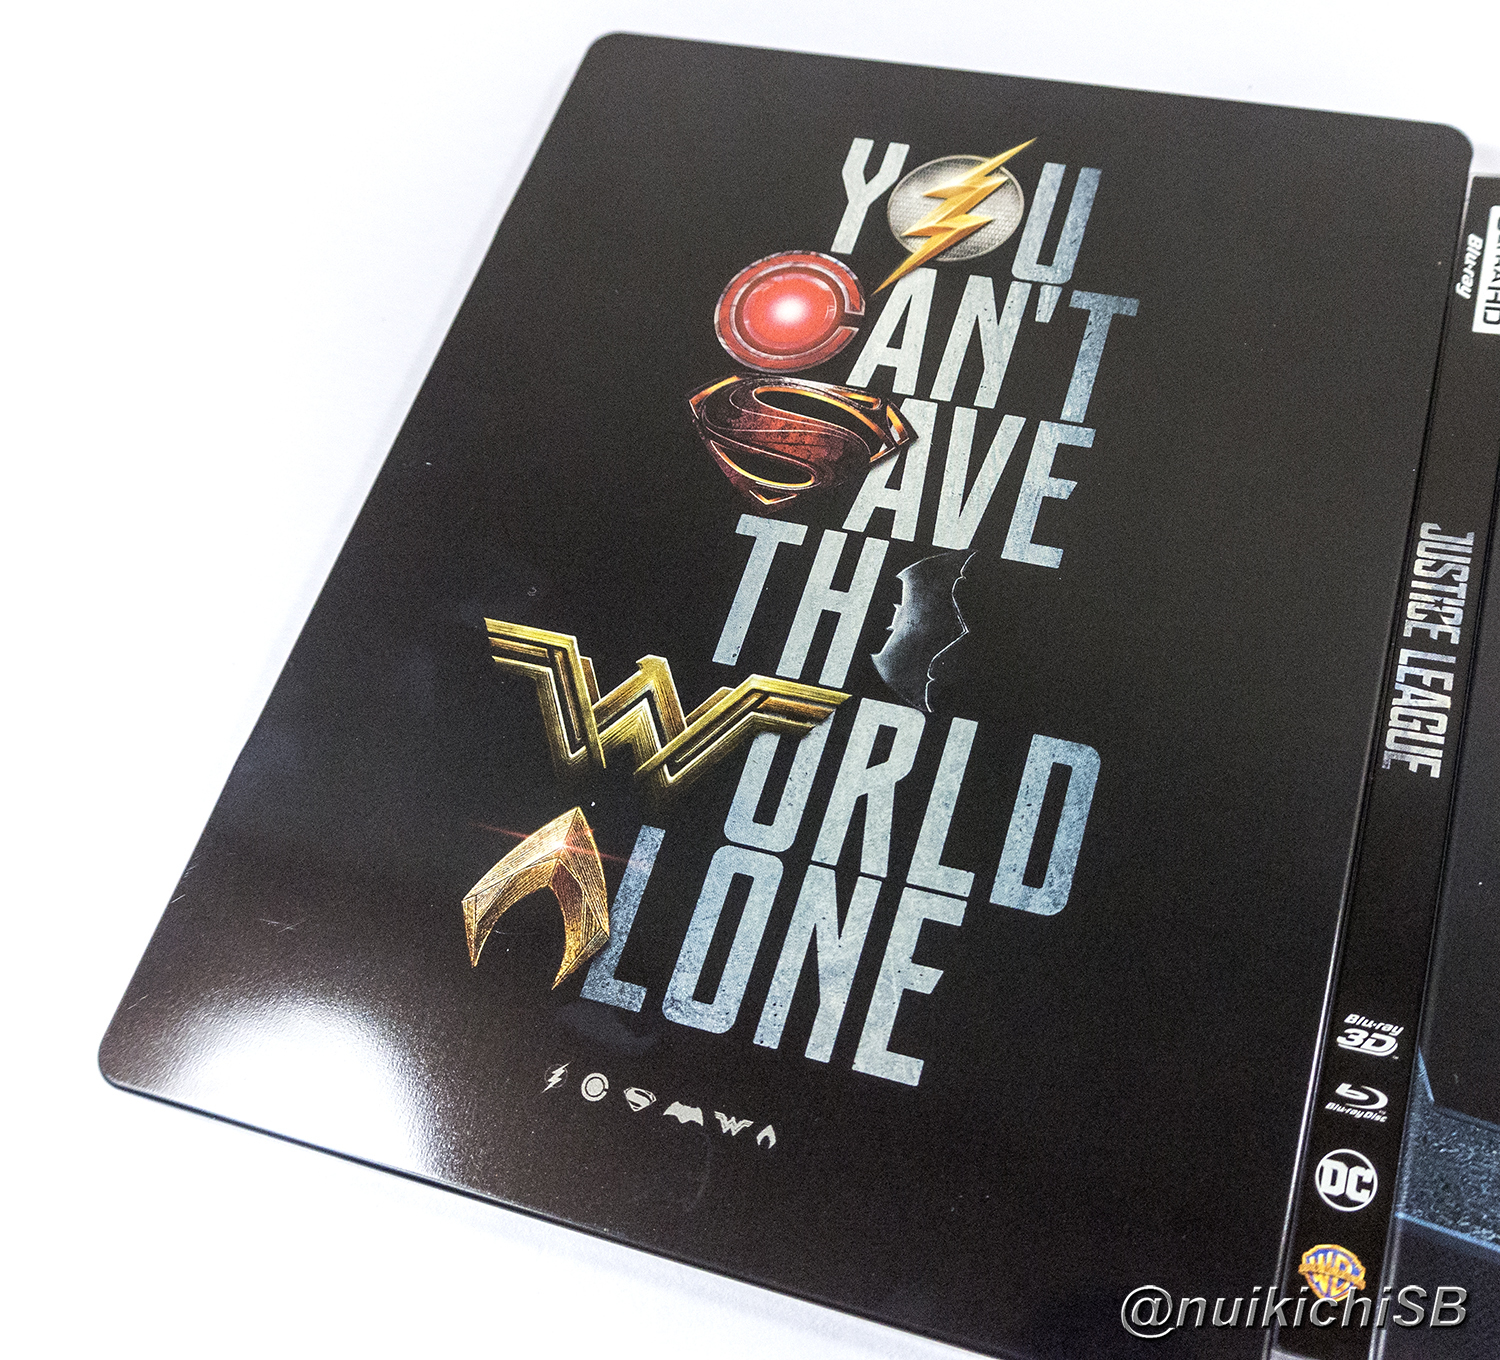 Justice League France Fnac 4K Ultra HD steelbook ジャスティス・リーグ フランス スチールブック